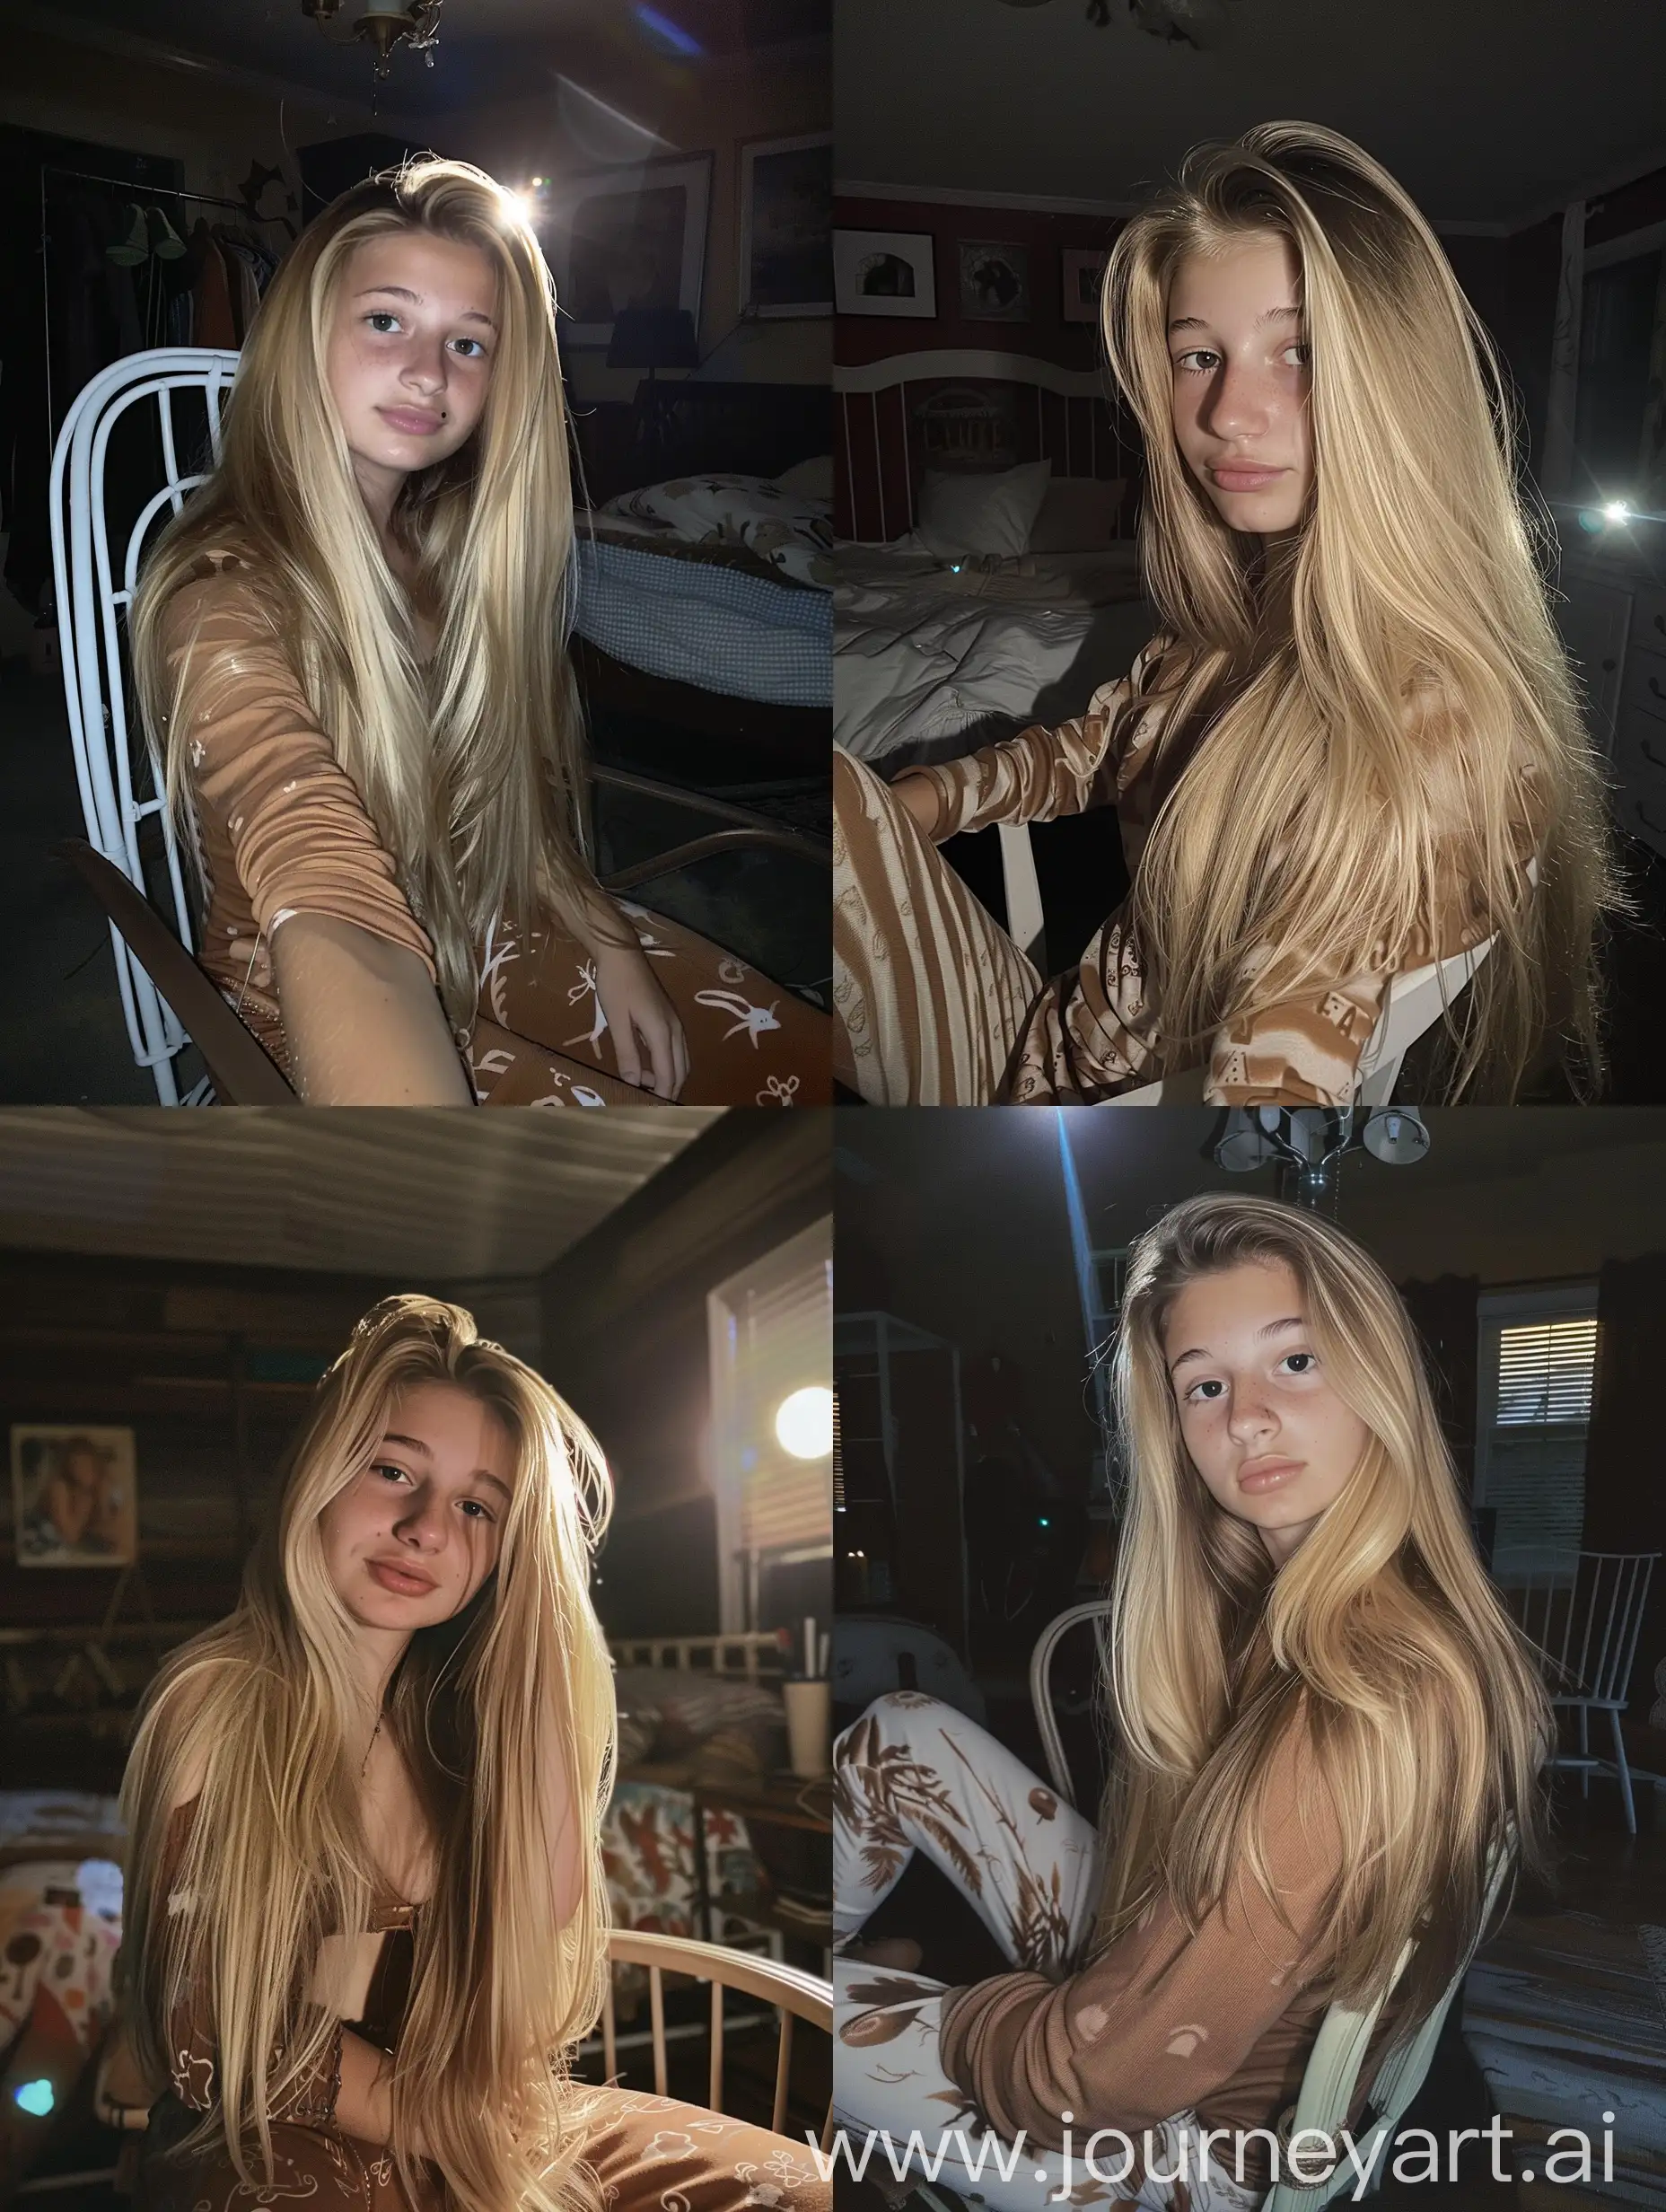 girl, blonde hair, 19 years old, bedroom , sitting on chair, pijama, selfie, at night, escuro, flash light